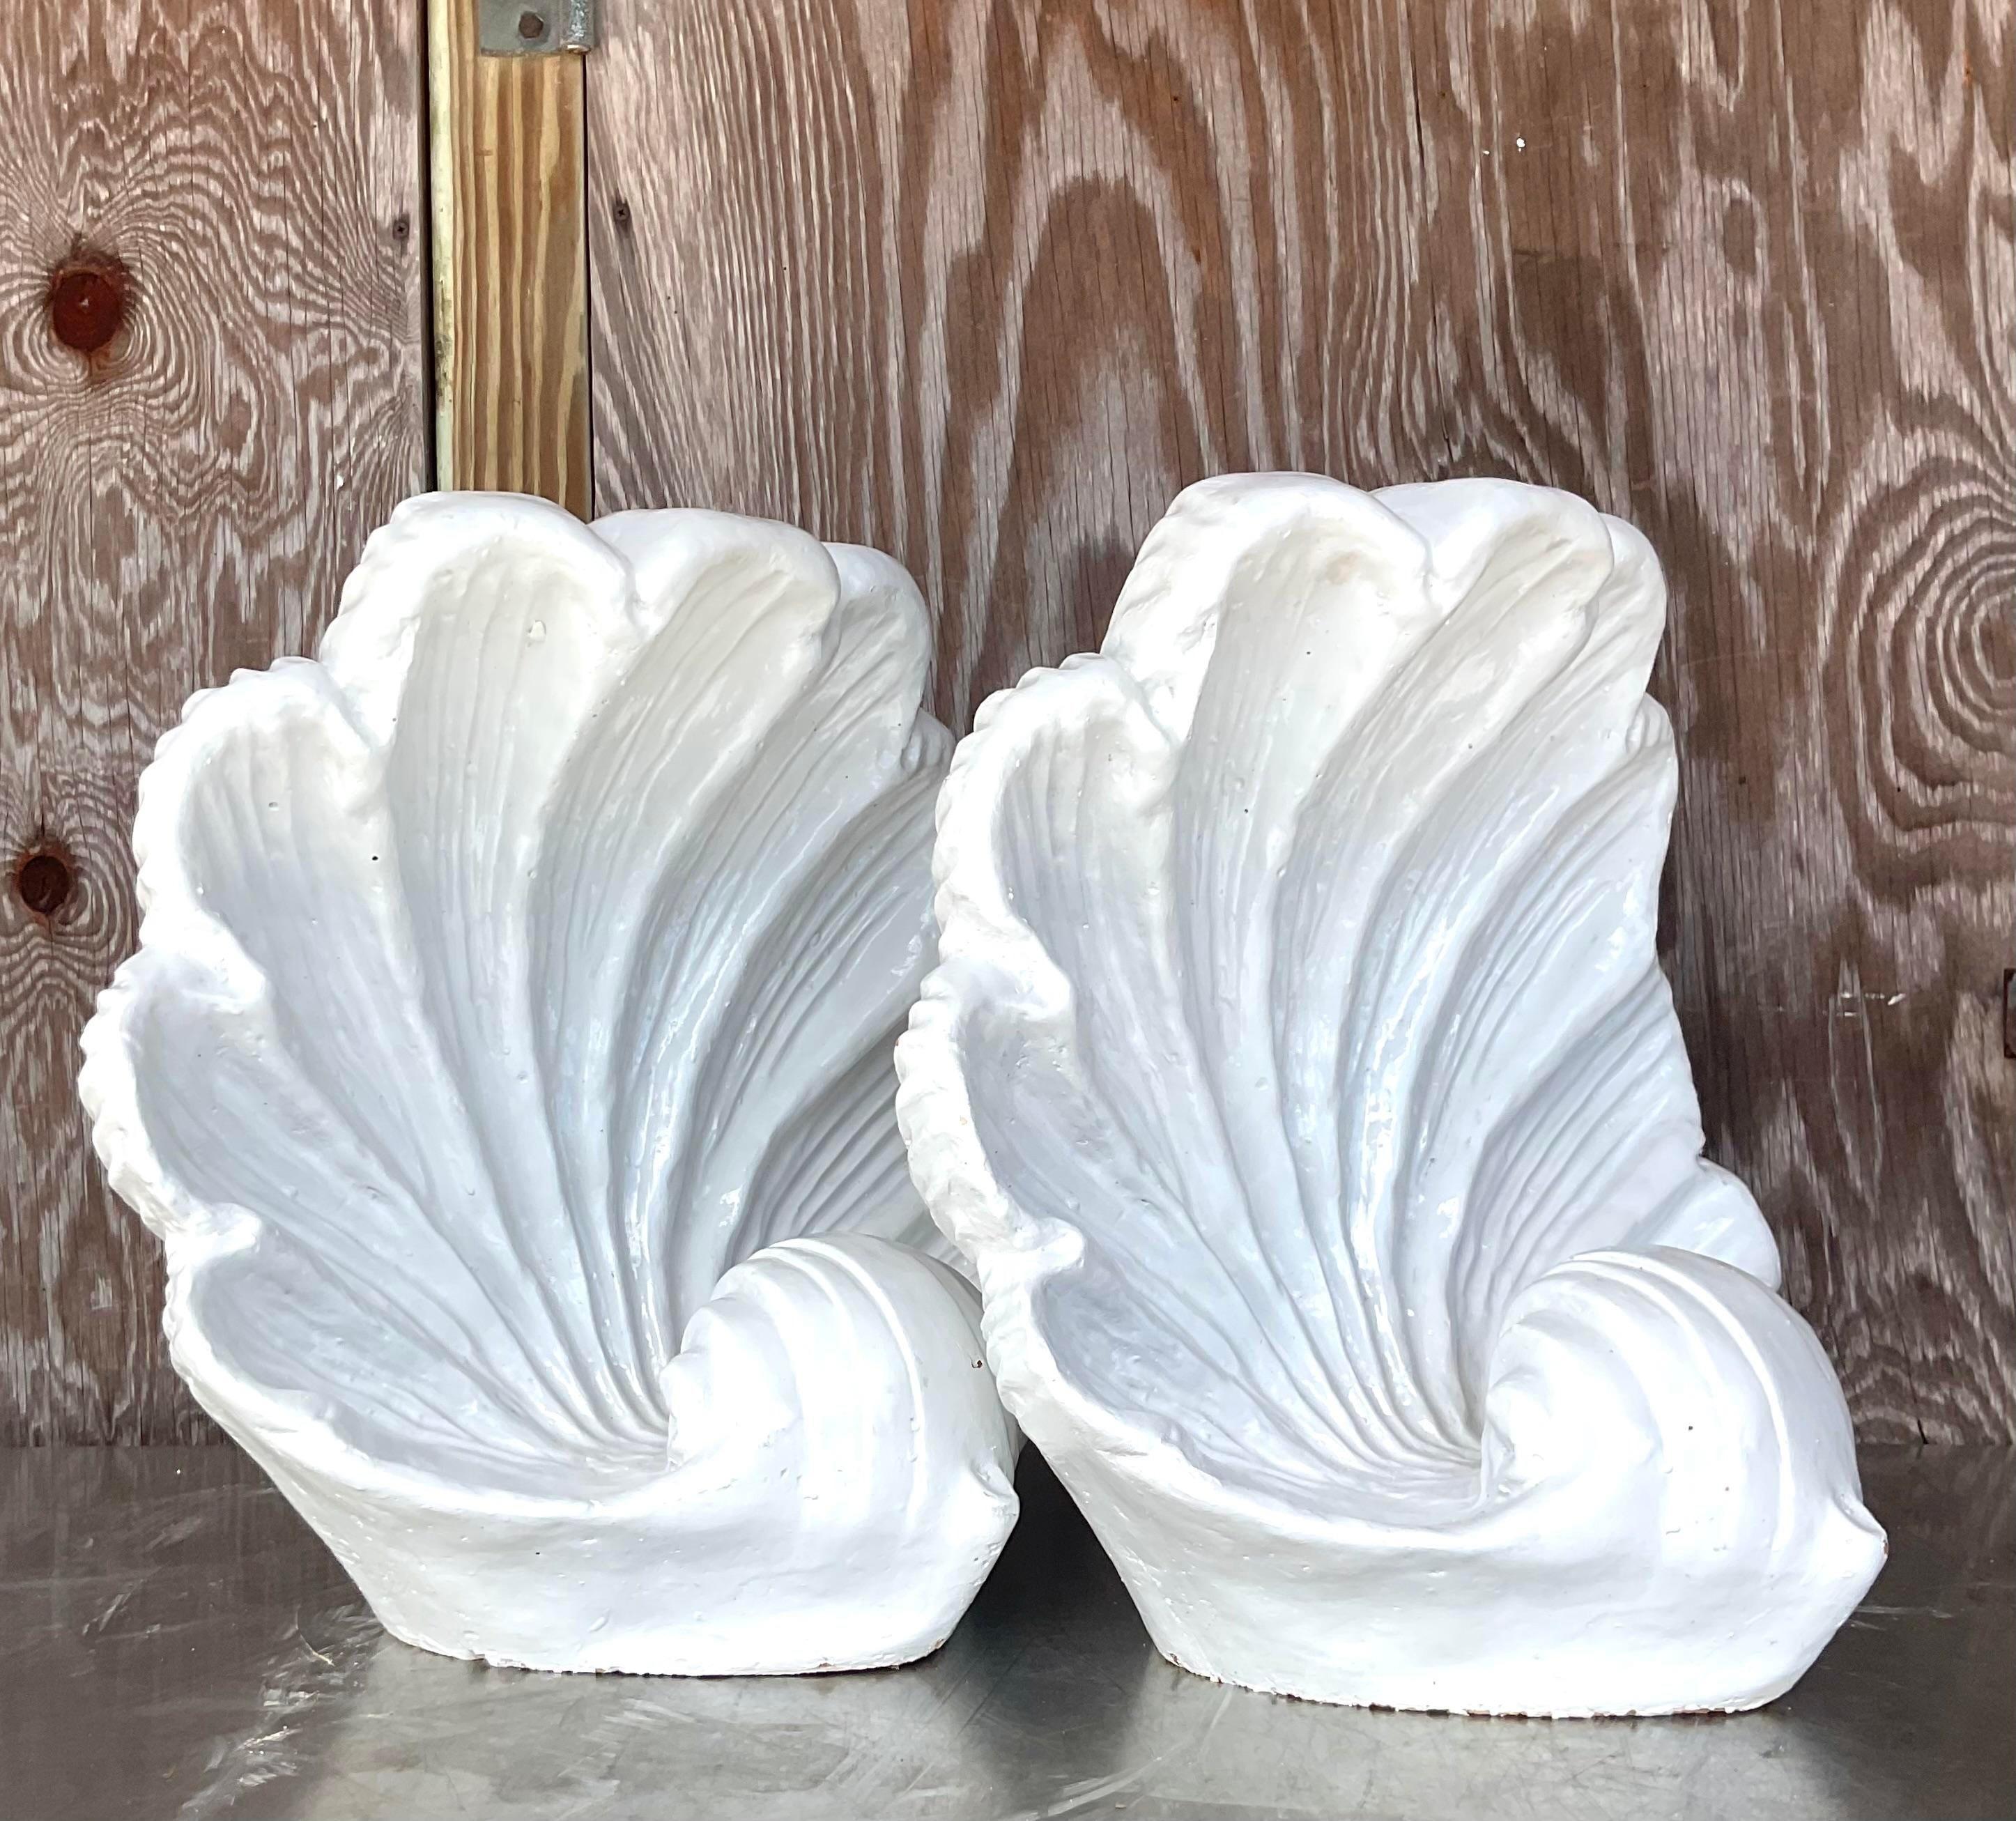 Vintage Coastal Glazed Ceramic Clam Shells - a Pair For Sale 2